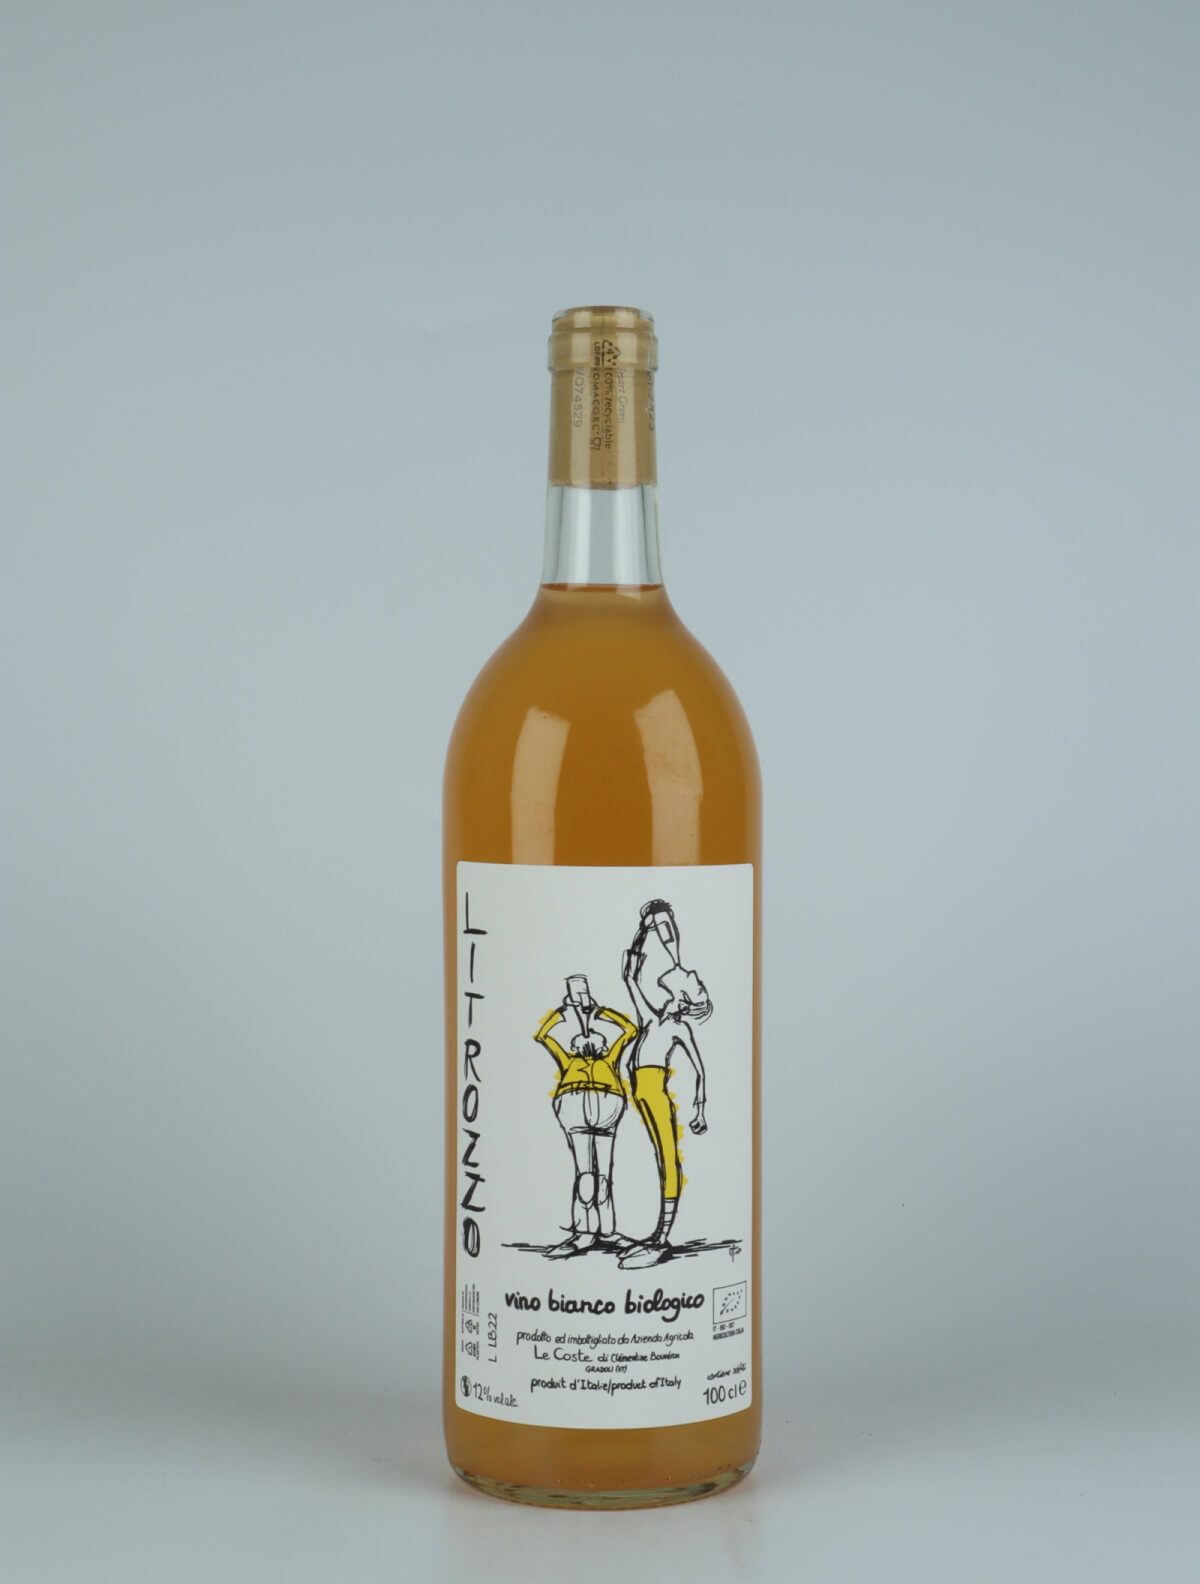 A bottle 2022 Litrozzo Bianco White wine from Le Coste, Lazio in Italy